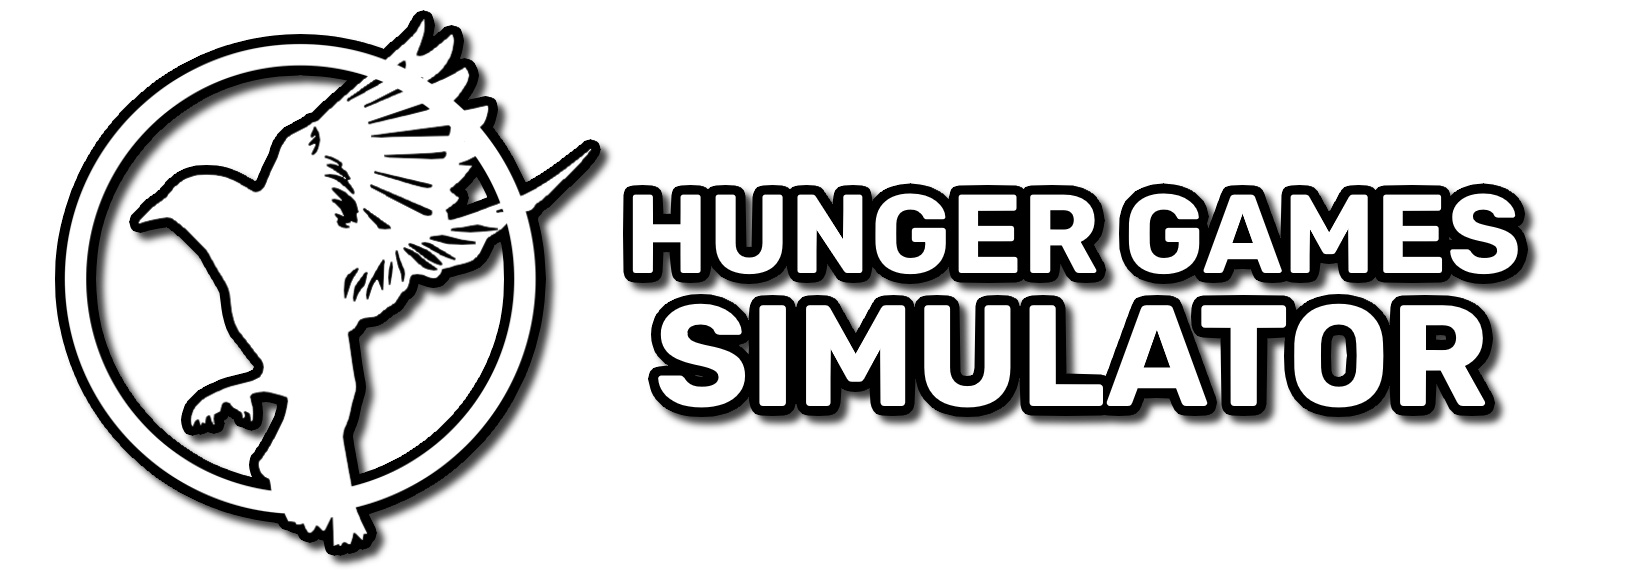 Hunger Games Simulator